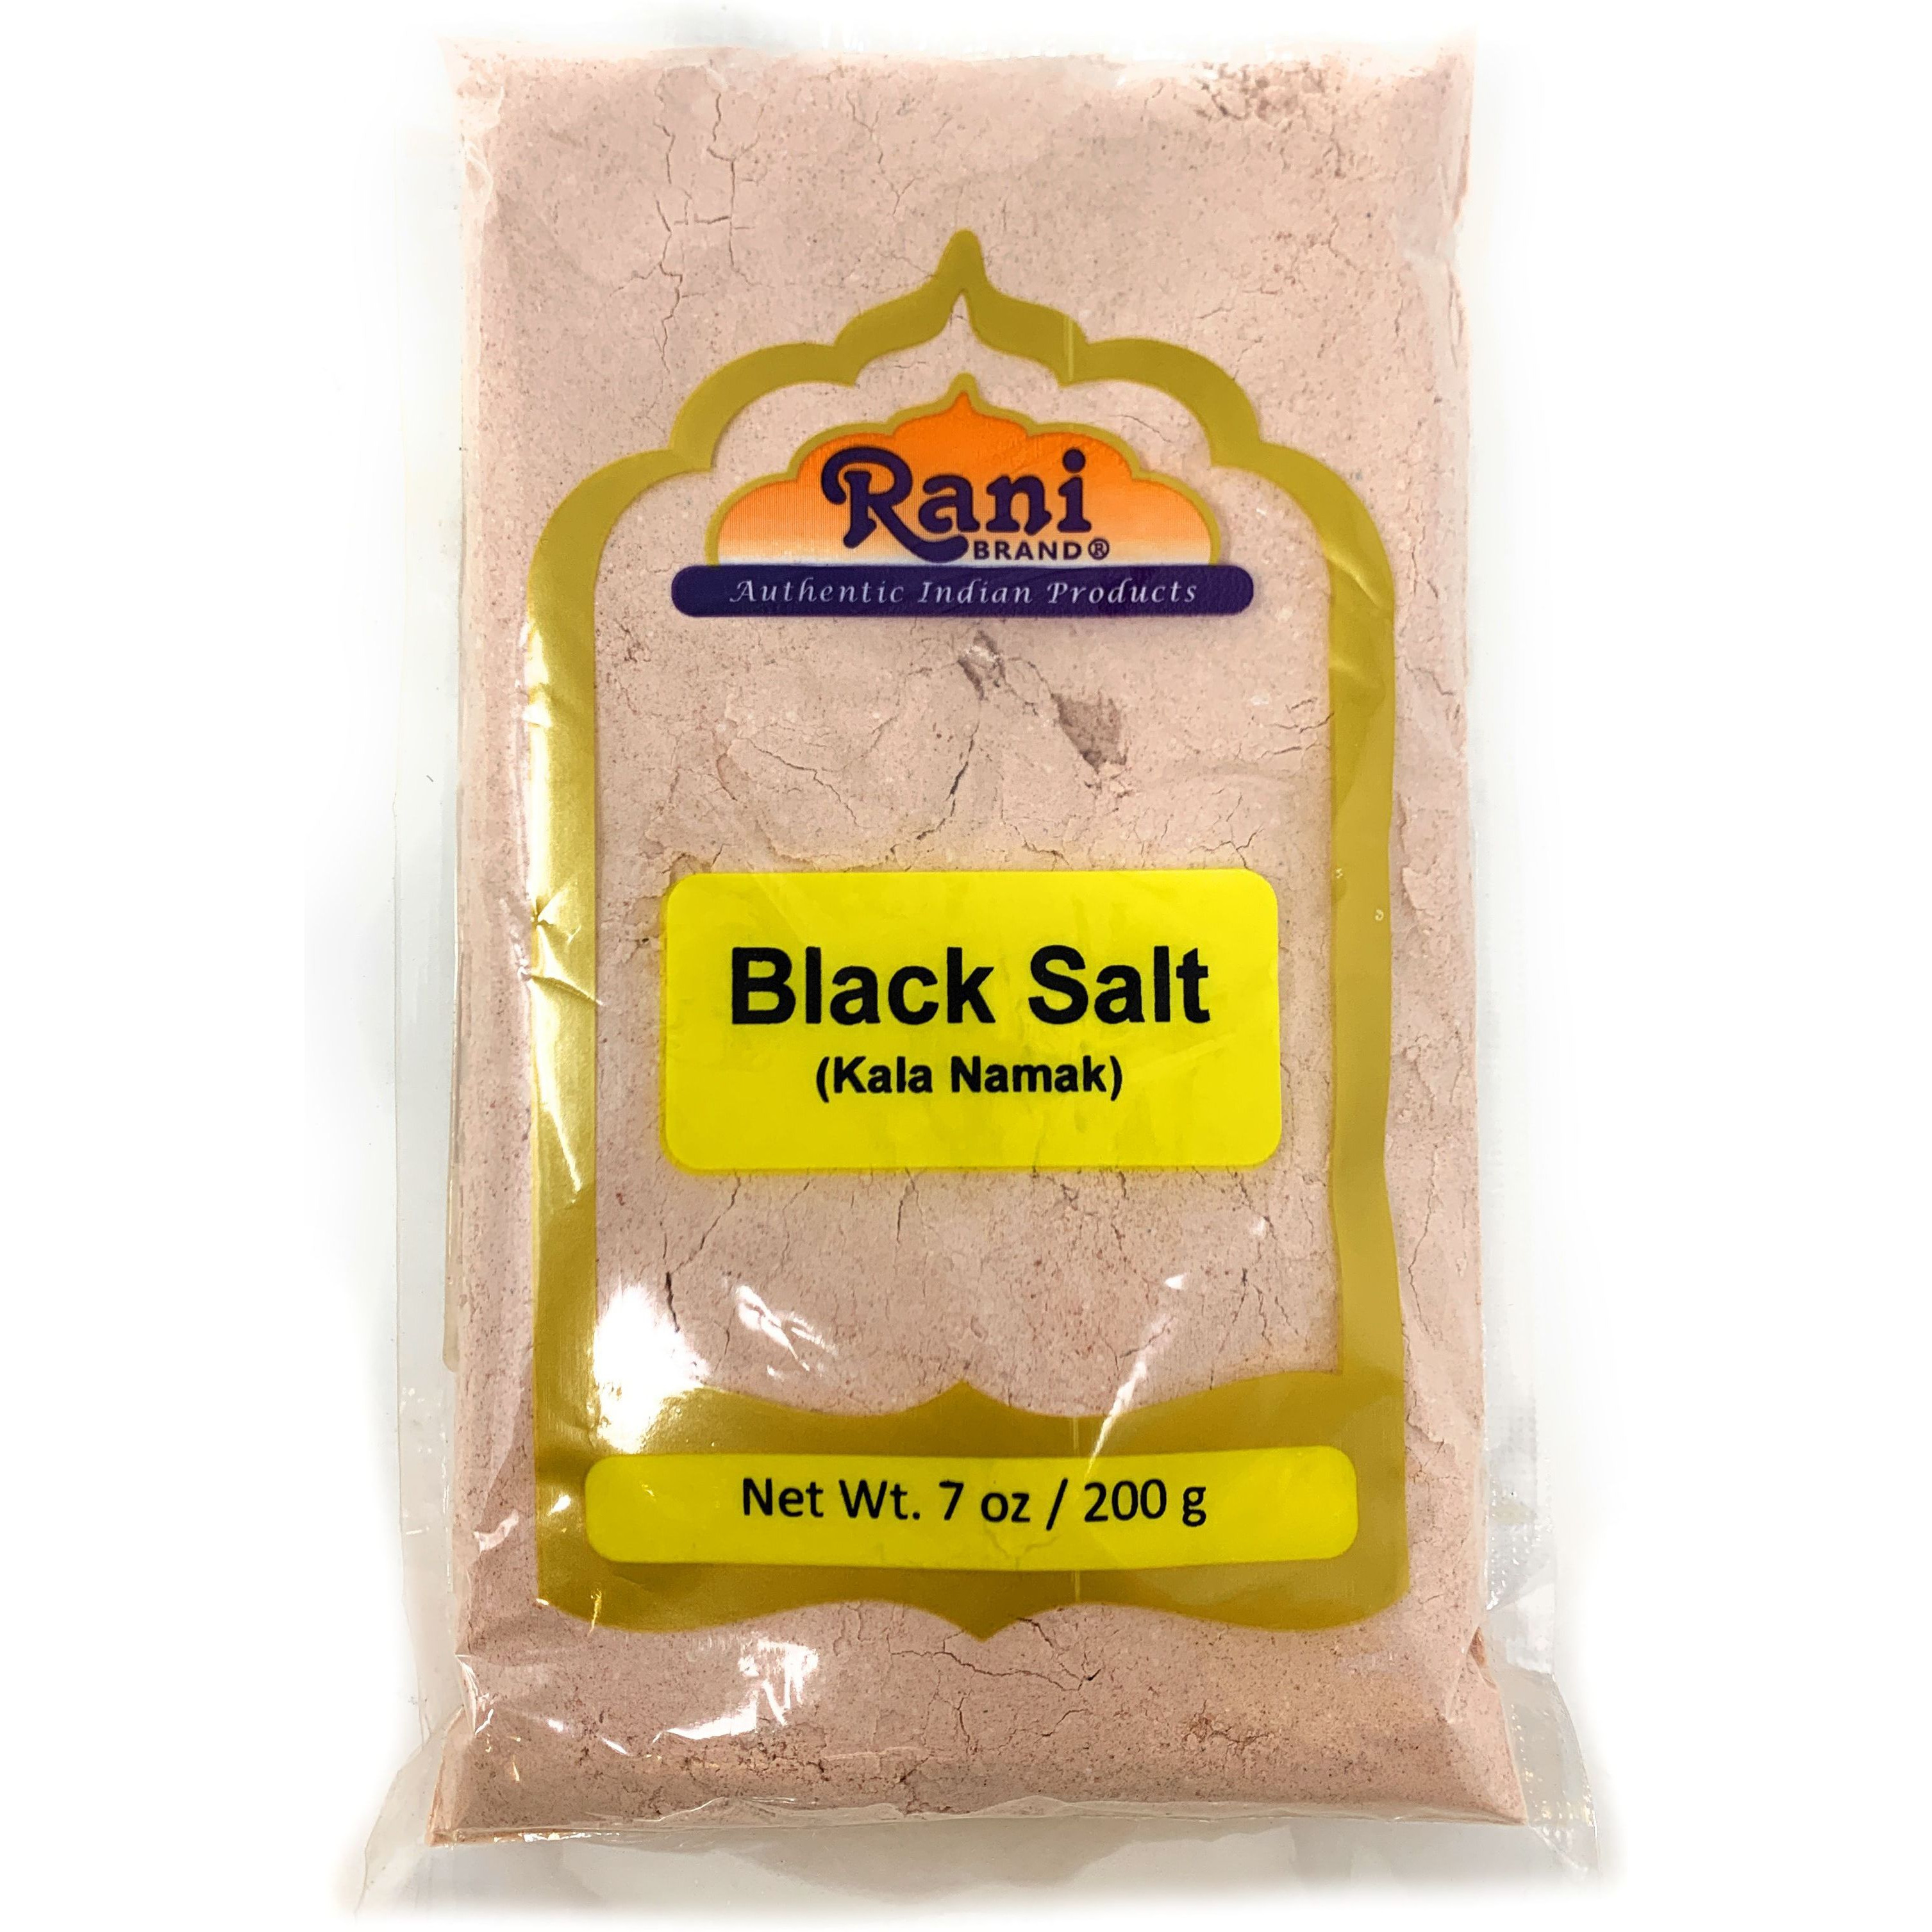 Rani Black Salt (Kala Namak) Powder, Vegan 200g (7oz) Unrefined, Pure and Natural | Gluten Free Ingredients | NON-GMO | Indian Origin